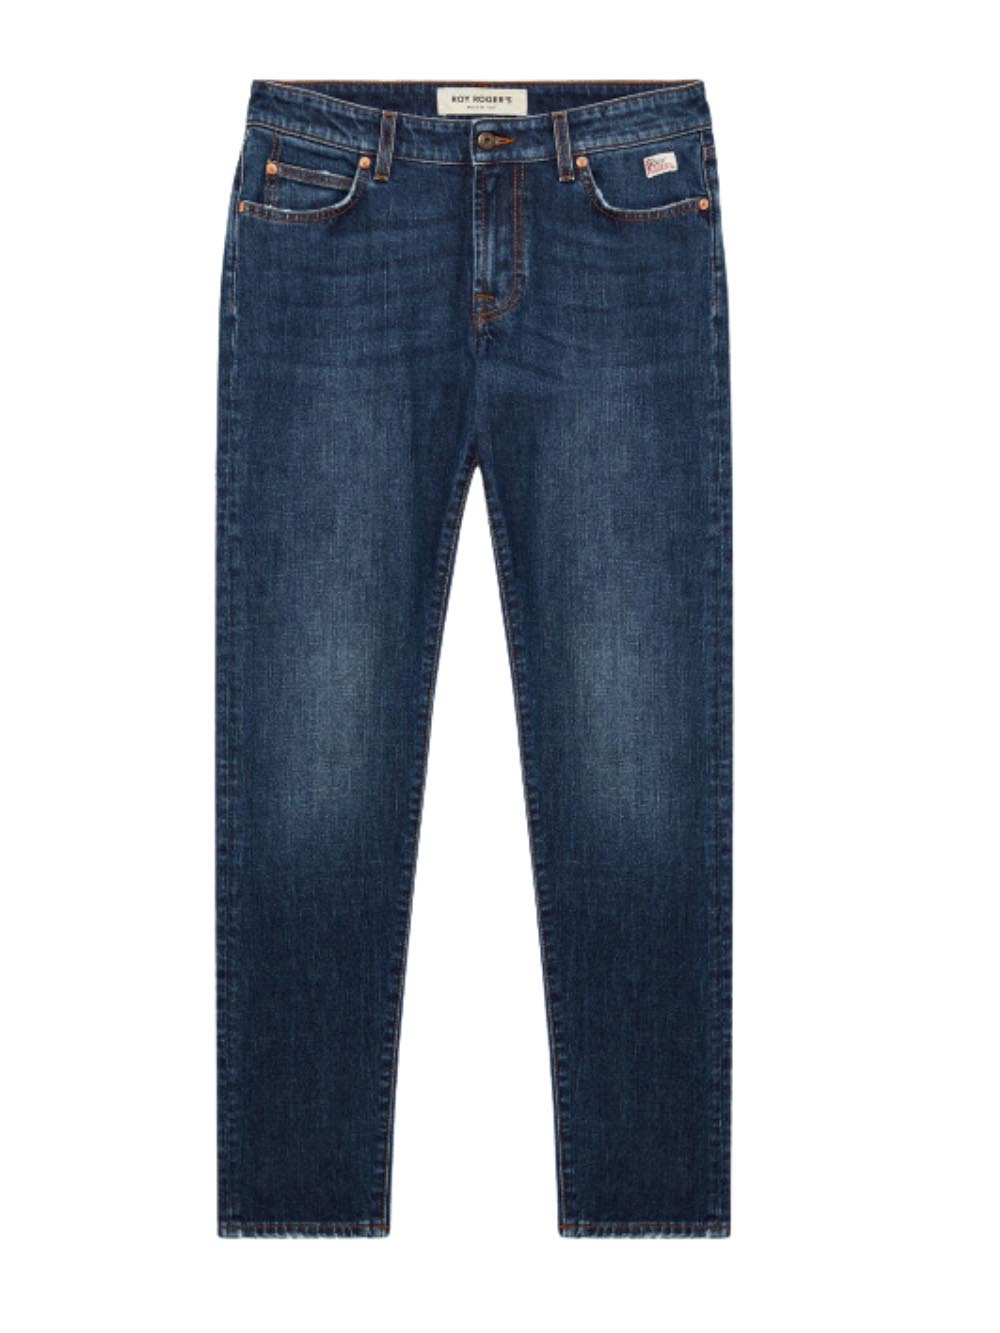 ROY ROGER'S Jeans Uomo Scuro